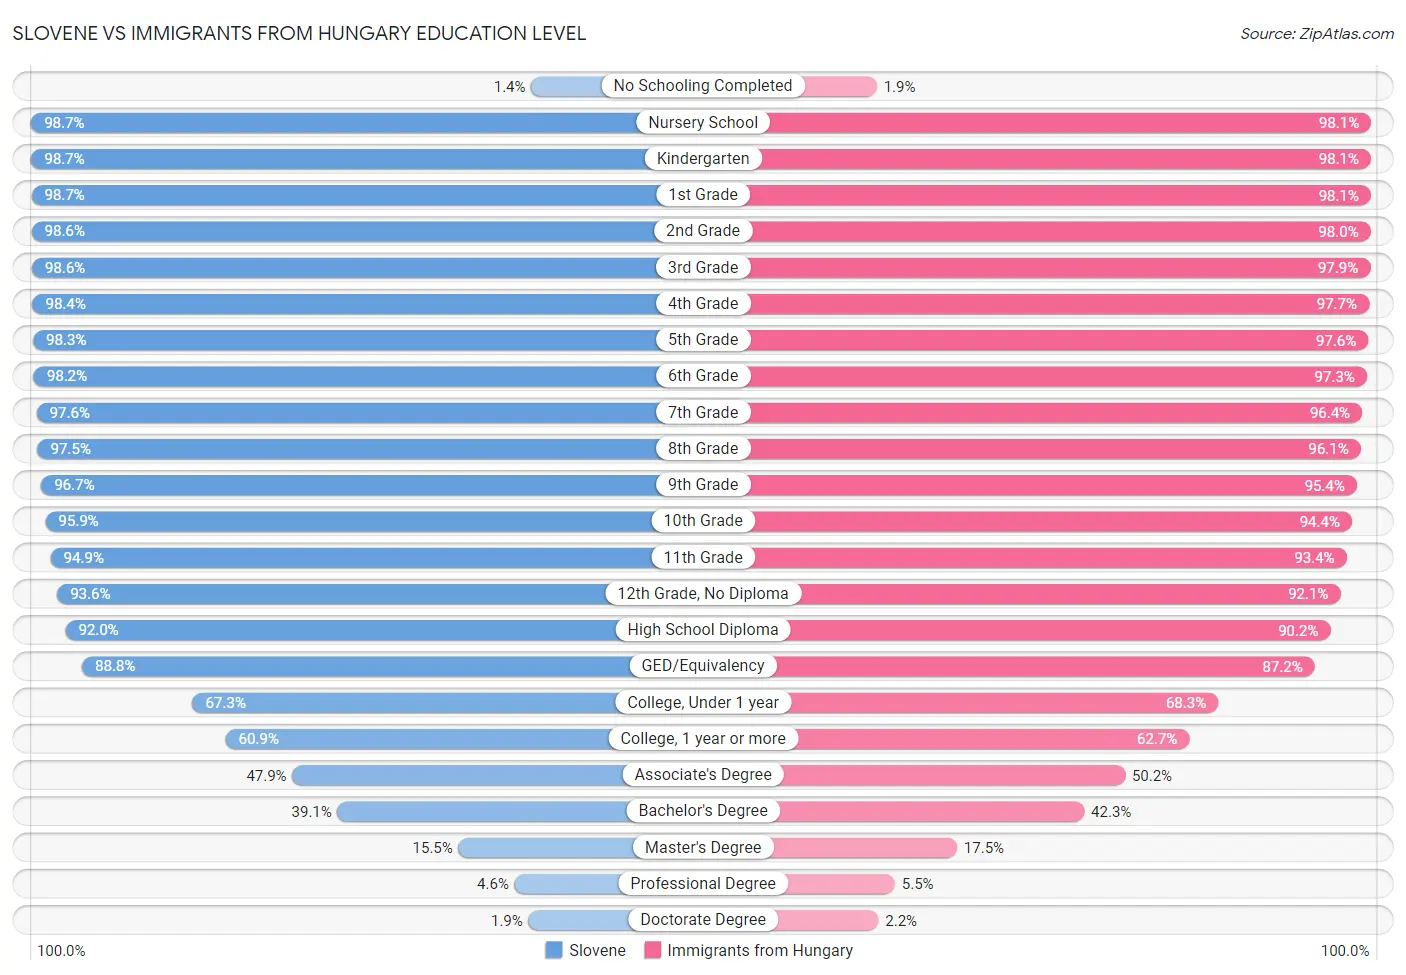 Slovene vs Immigrants from Hungary Education Level